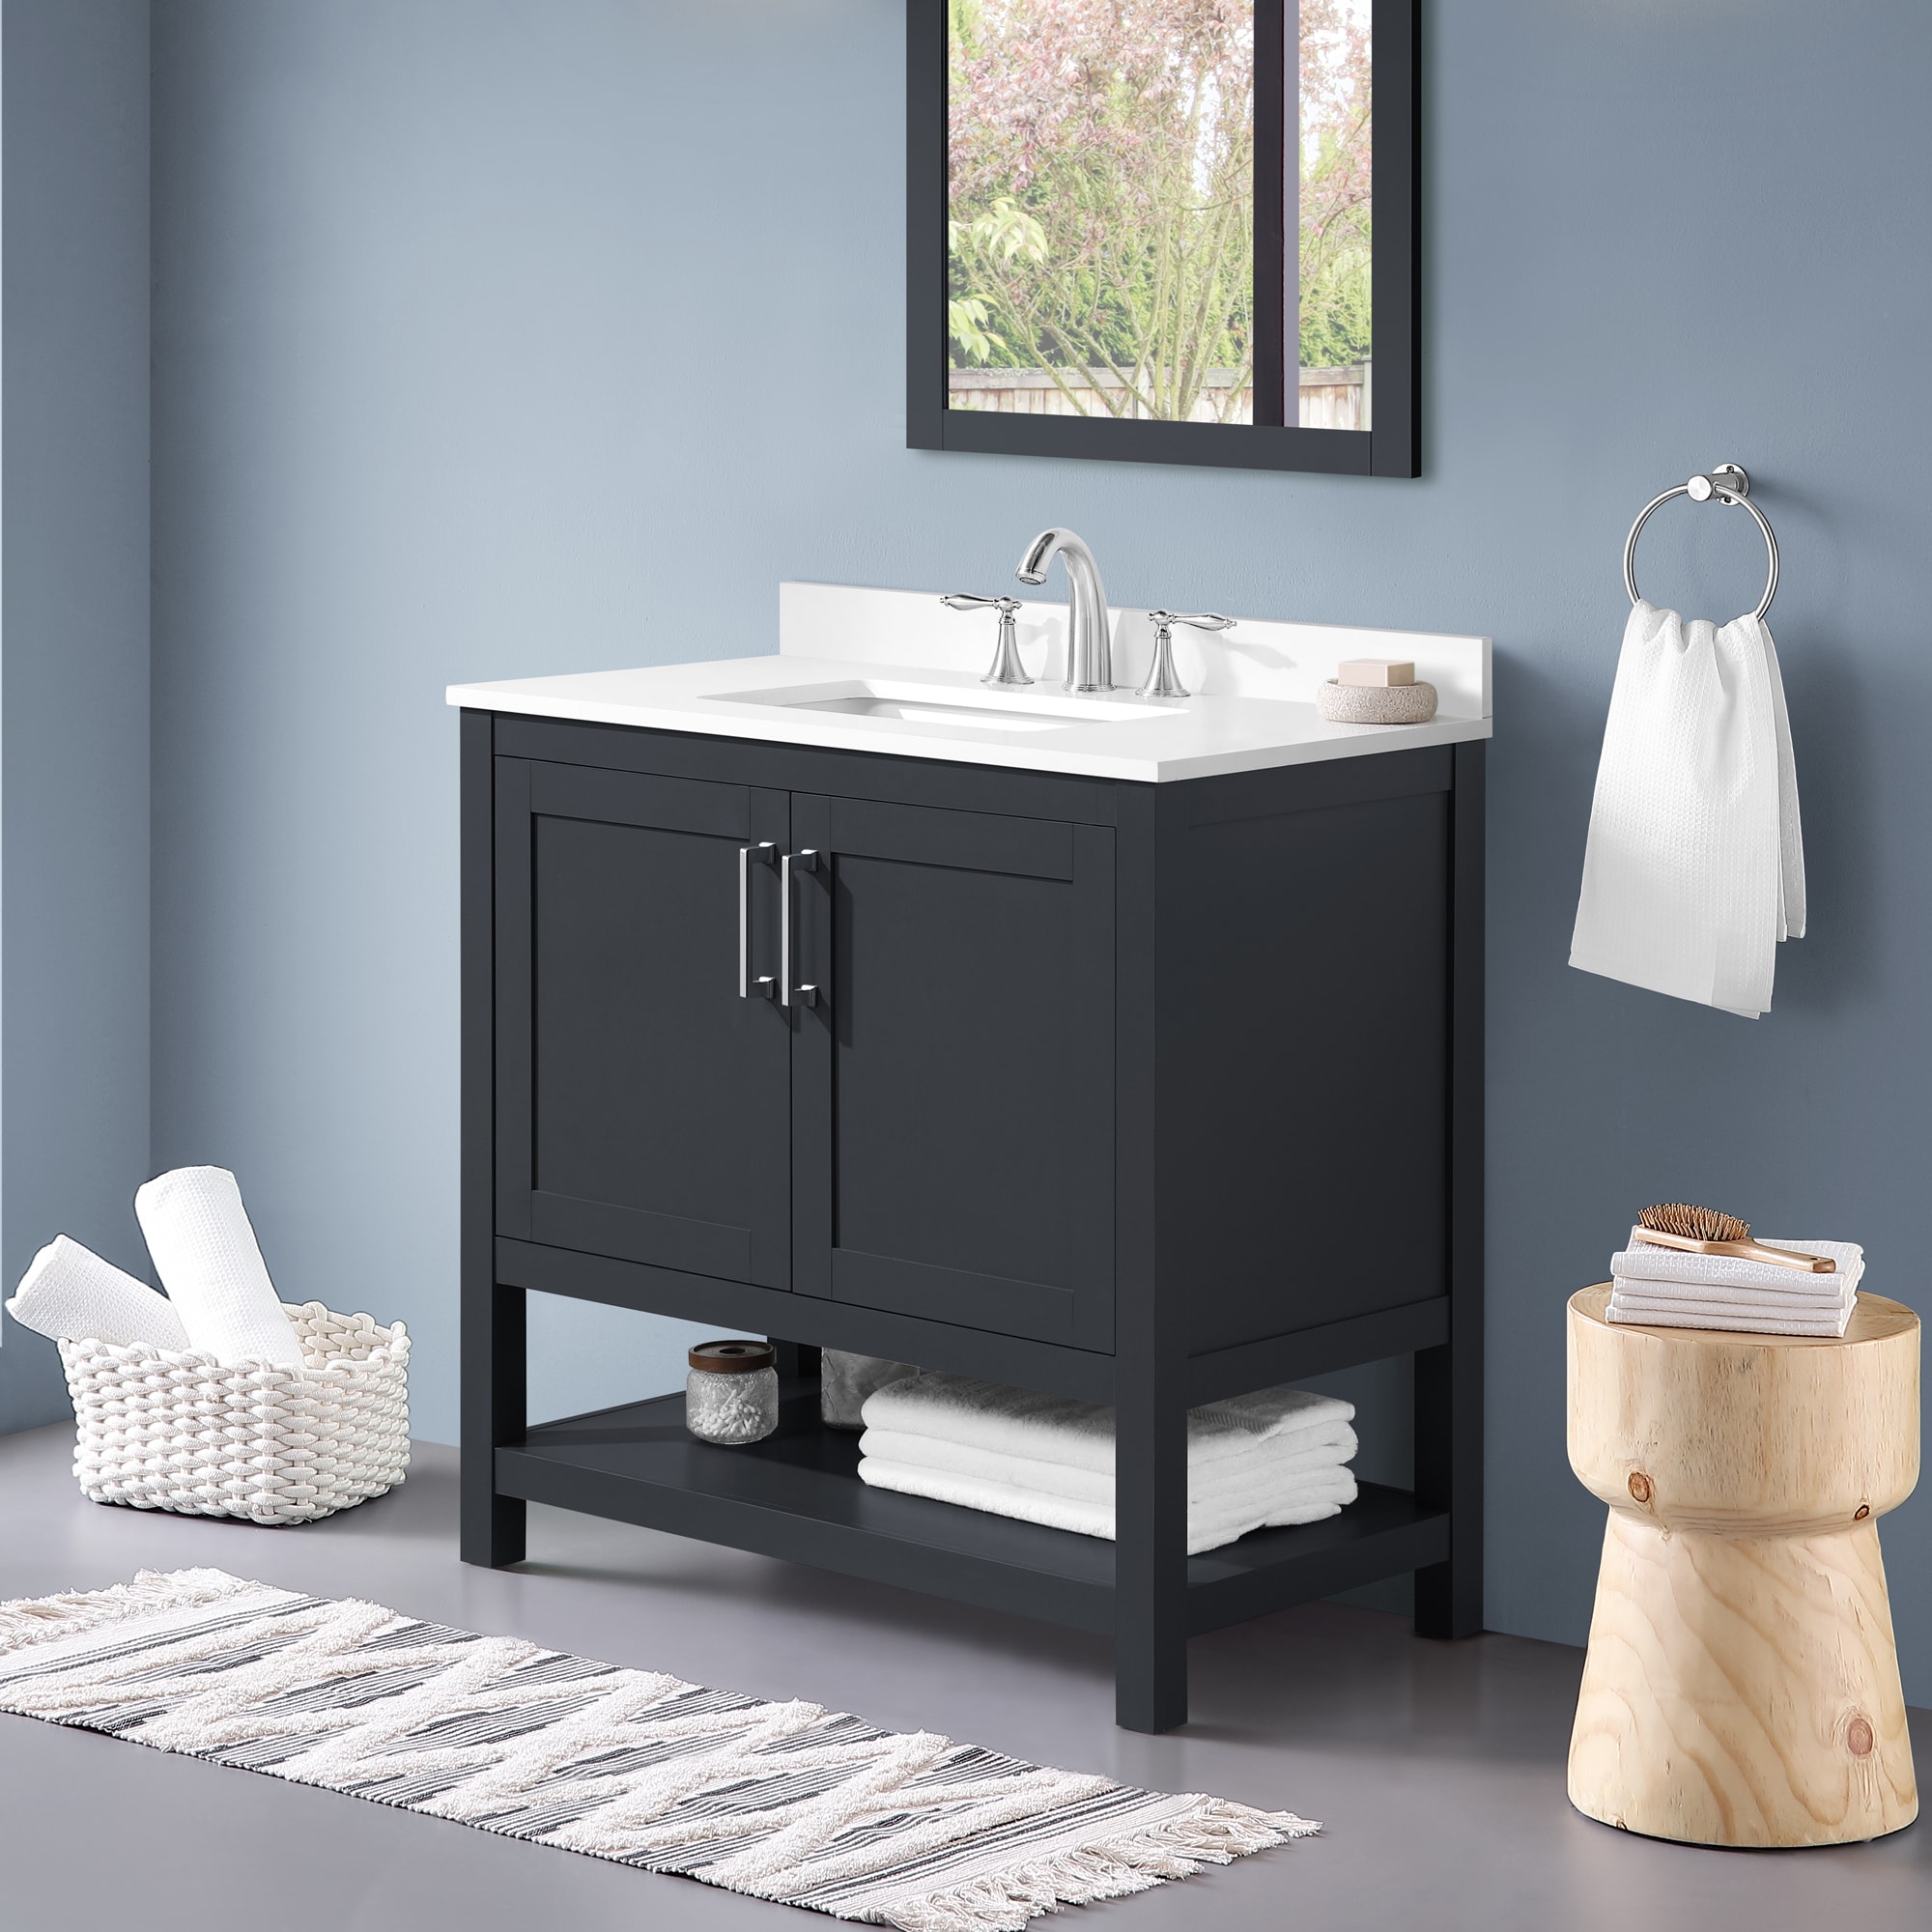 OVE Decors Albury 36-in Dark Charcoal Undermount Single Sink Bathroom ...